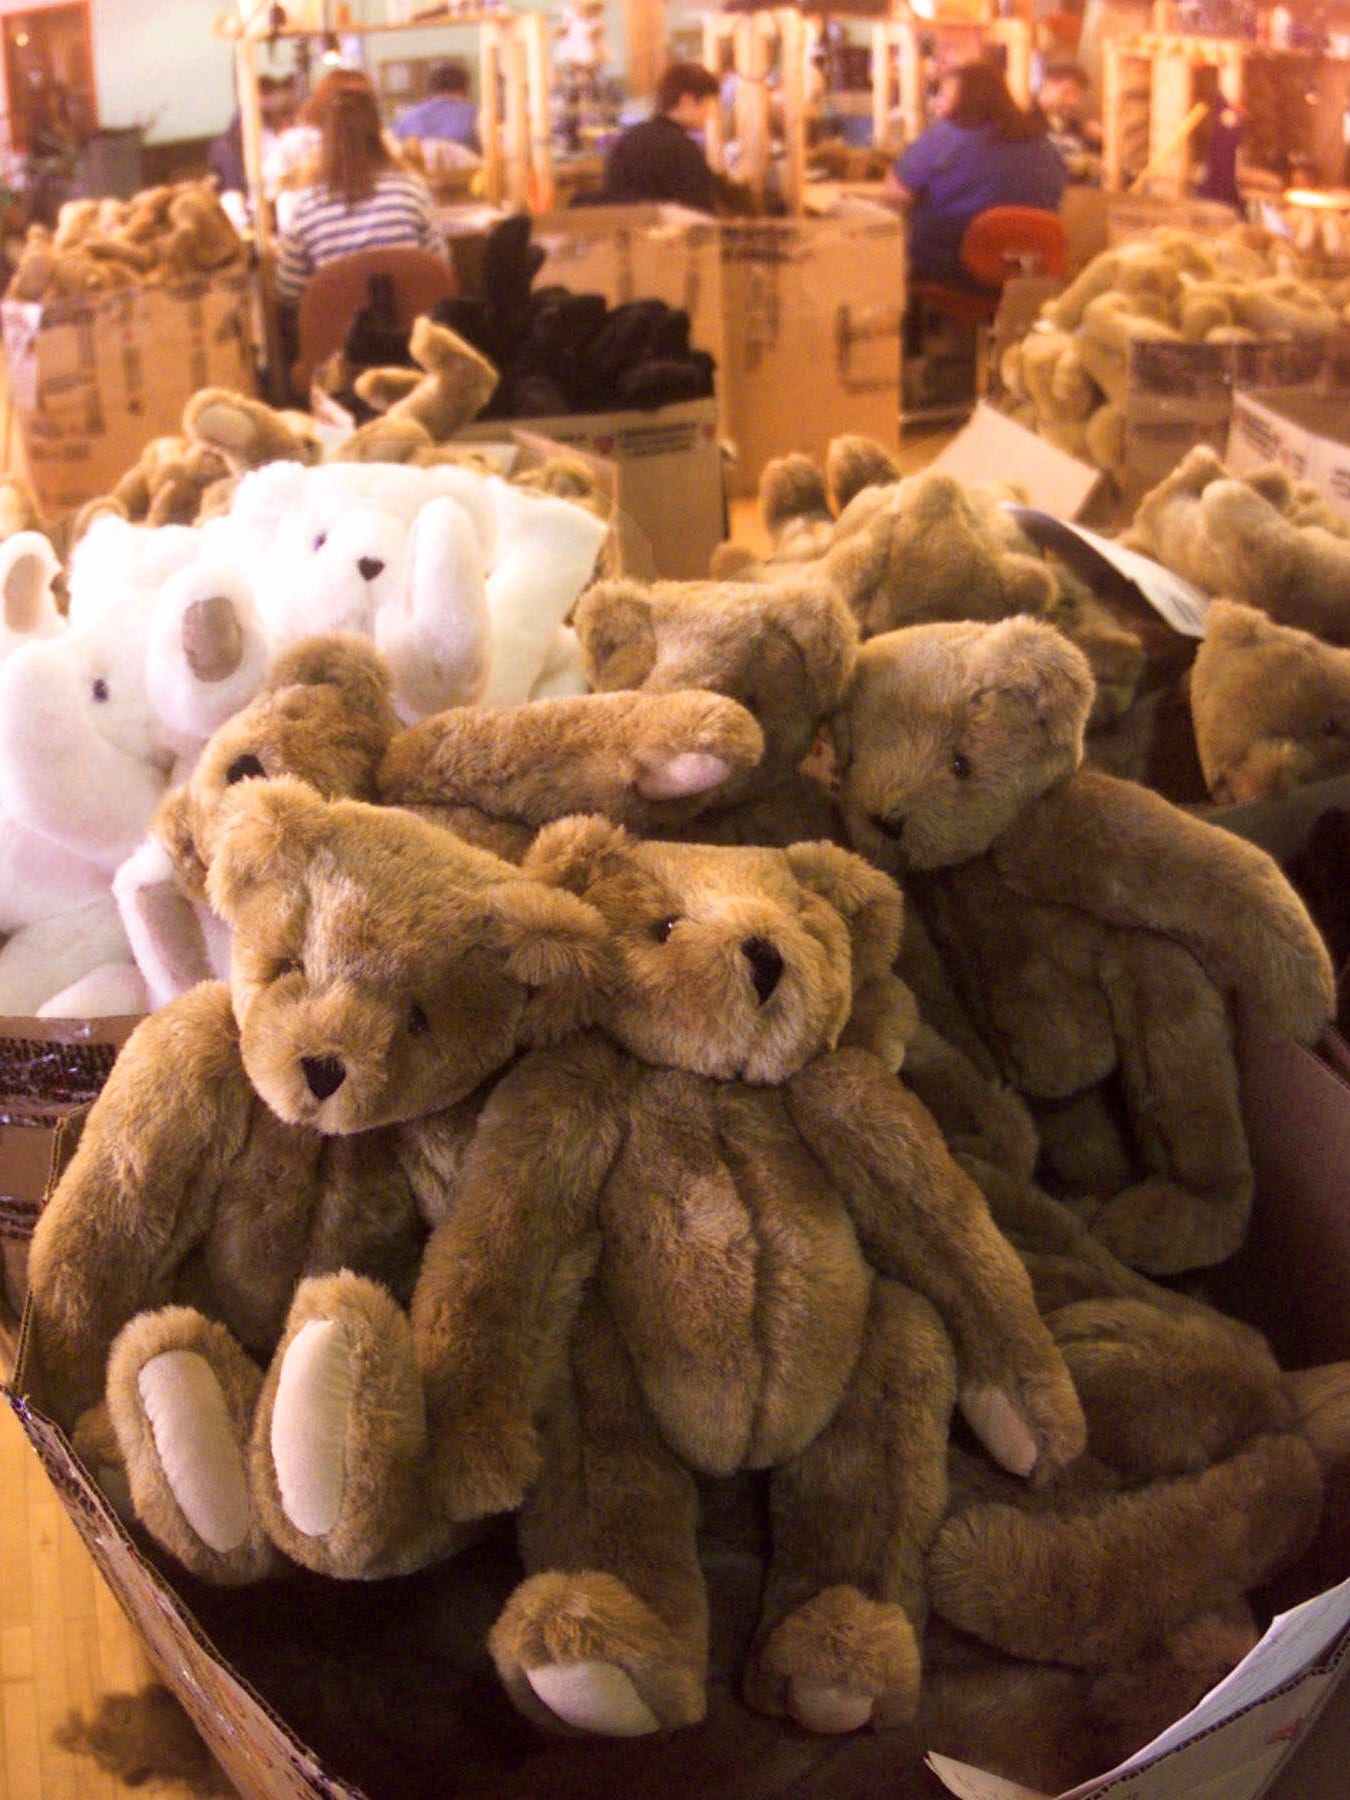 vermont teddy bear job openings in cambridge